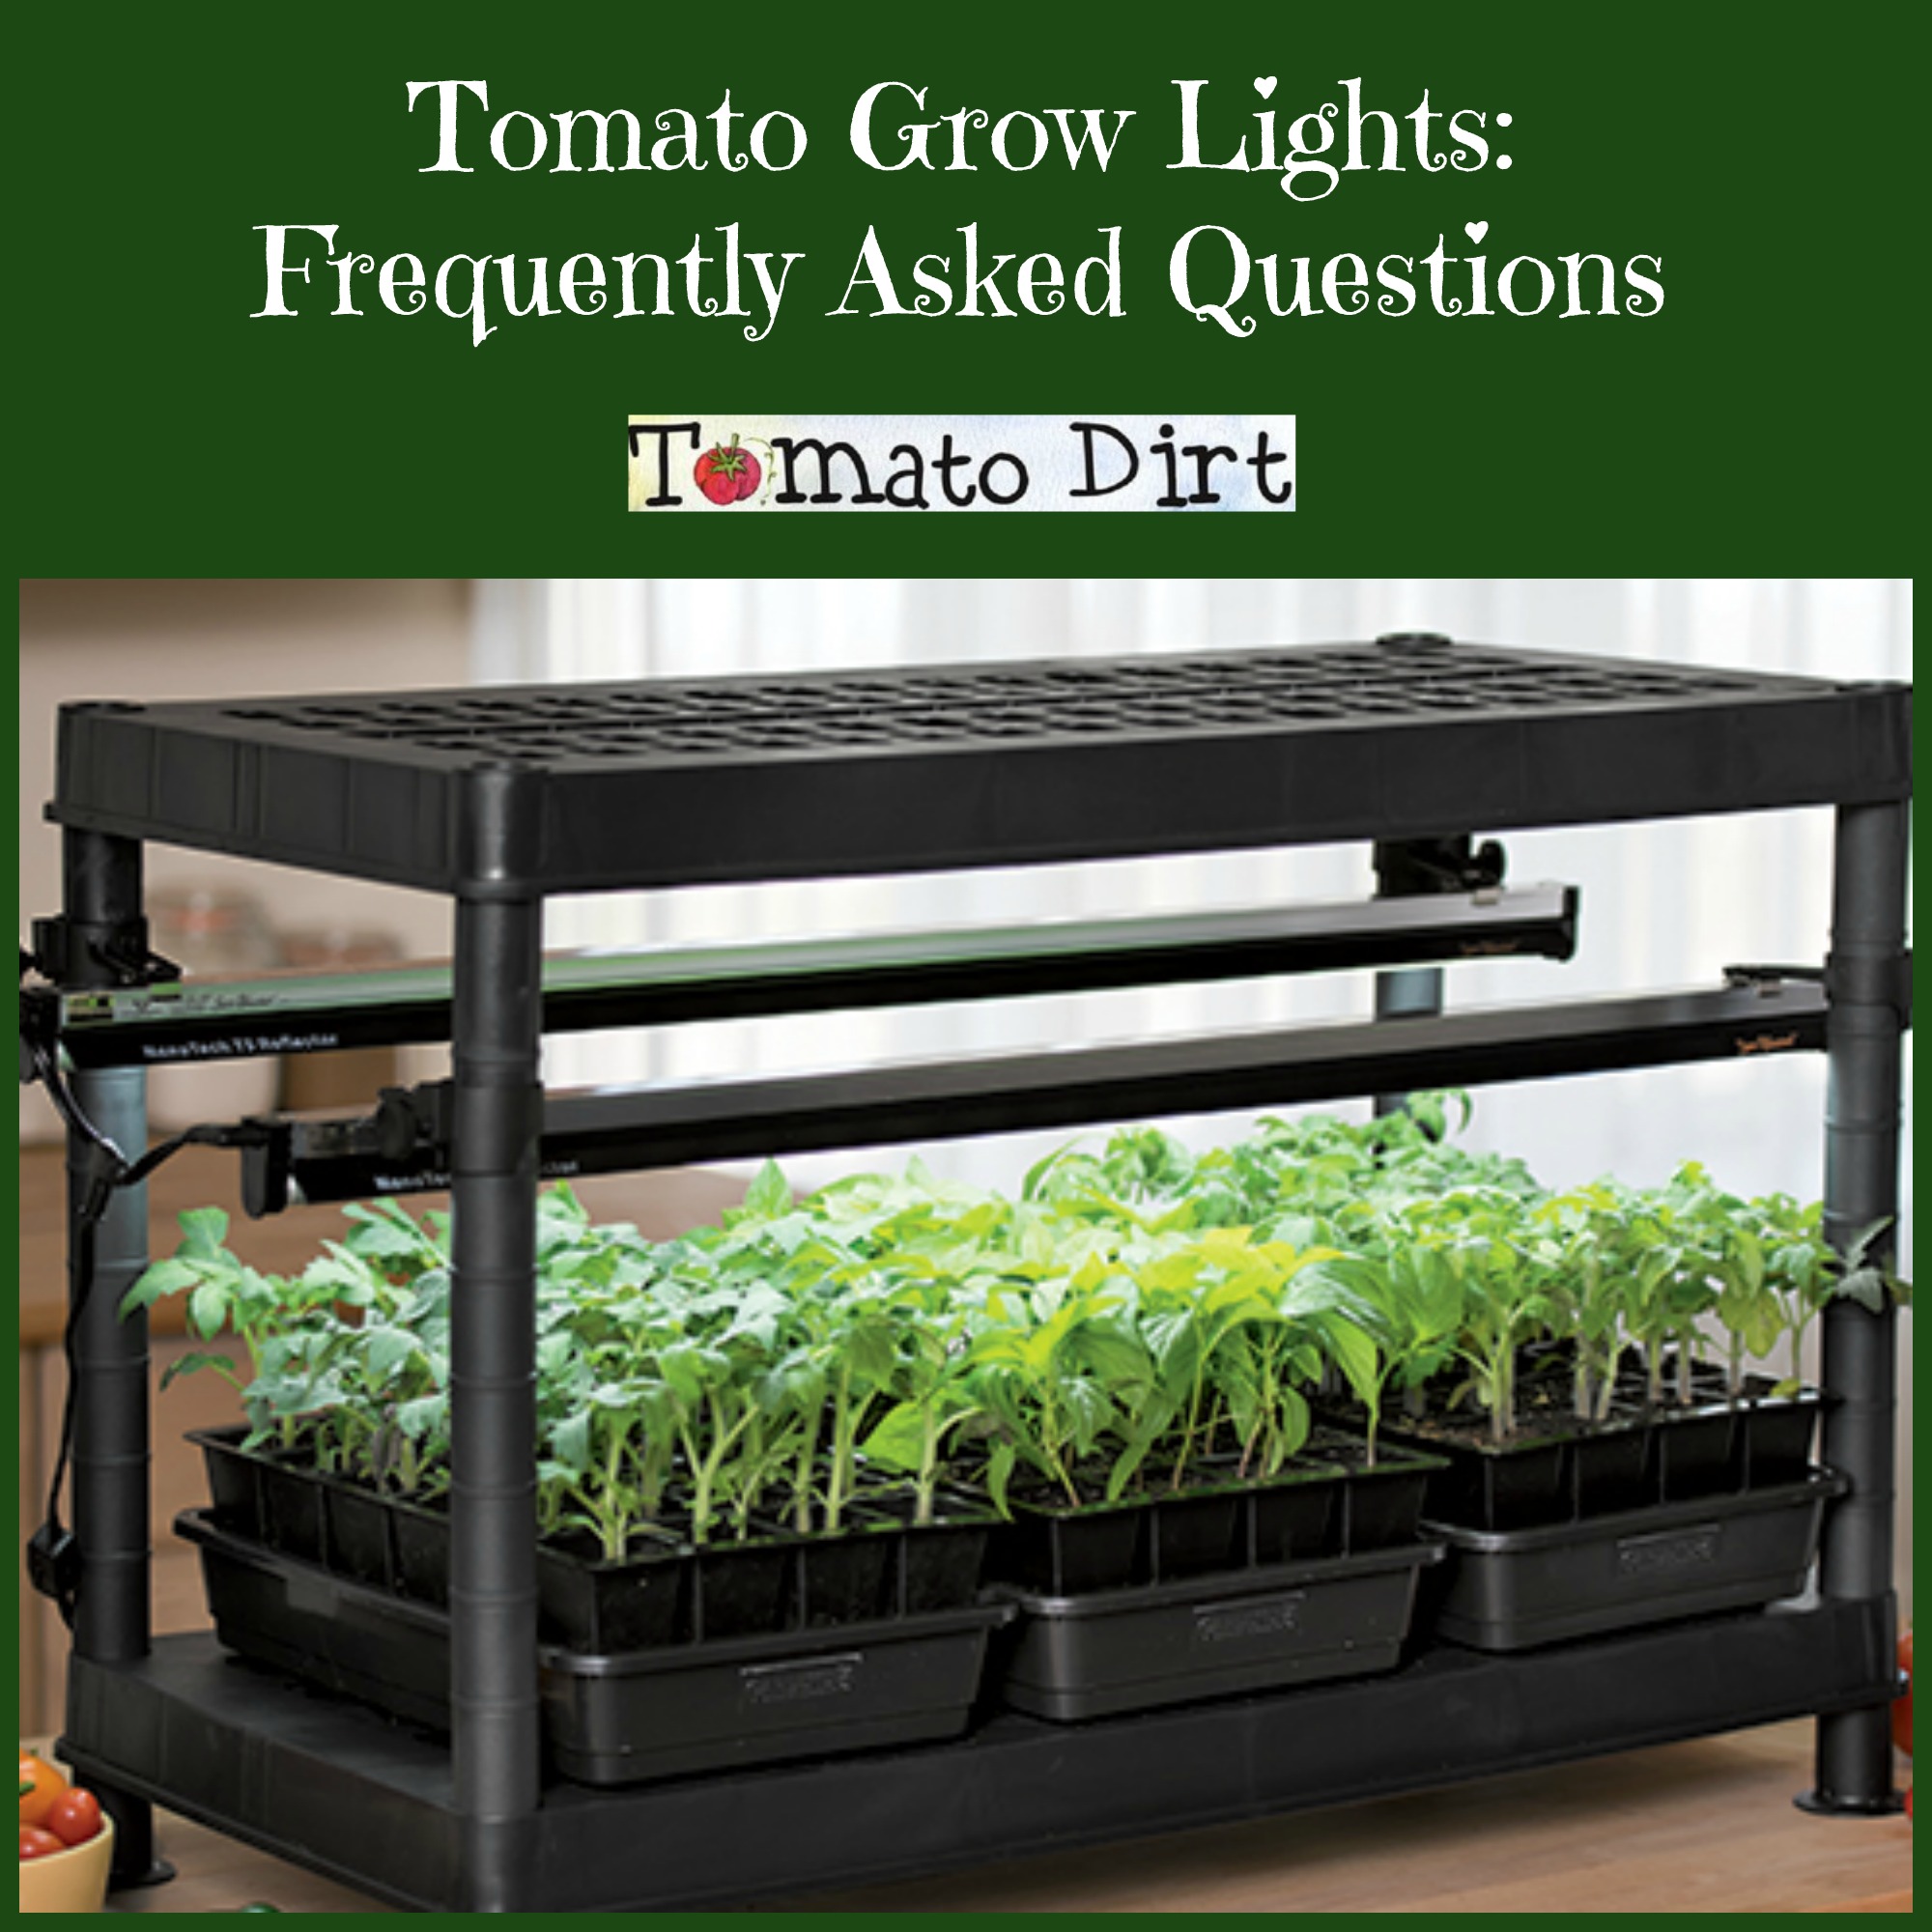 Tomato Grow Lights for Seedlings: FAQs from Tomato Dirt